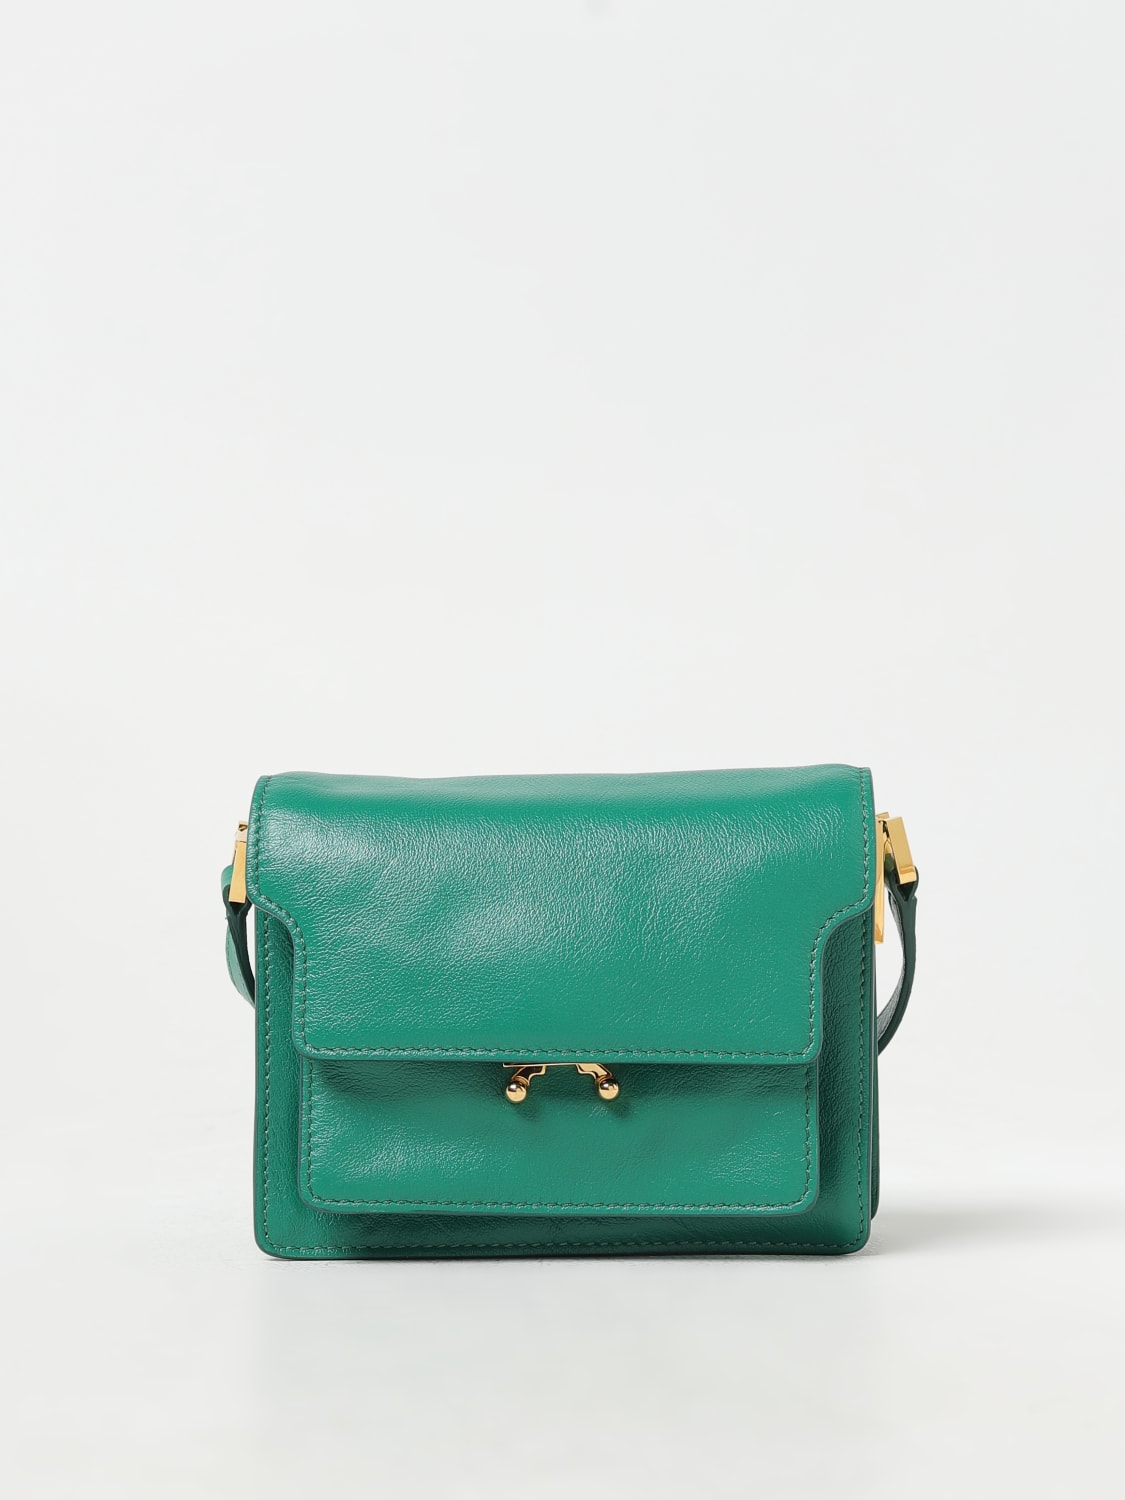 The Trunk Bag Mini in Green